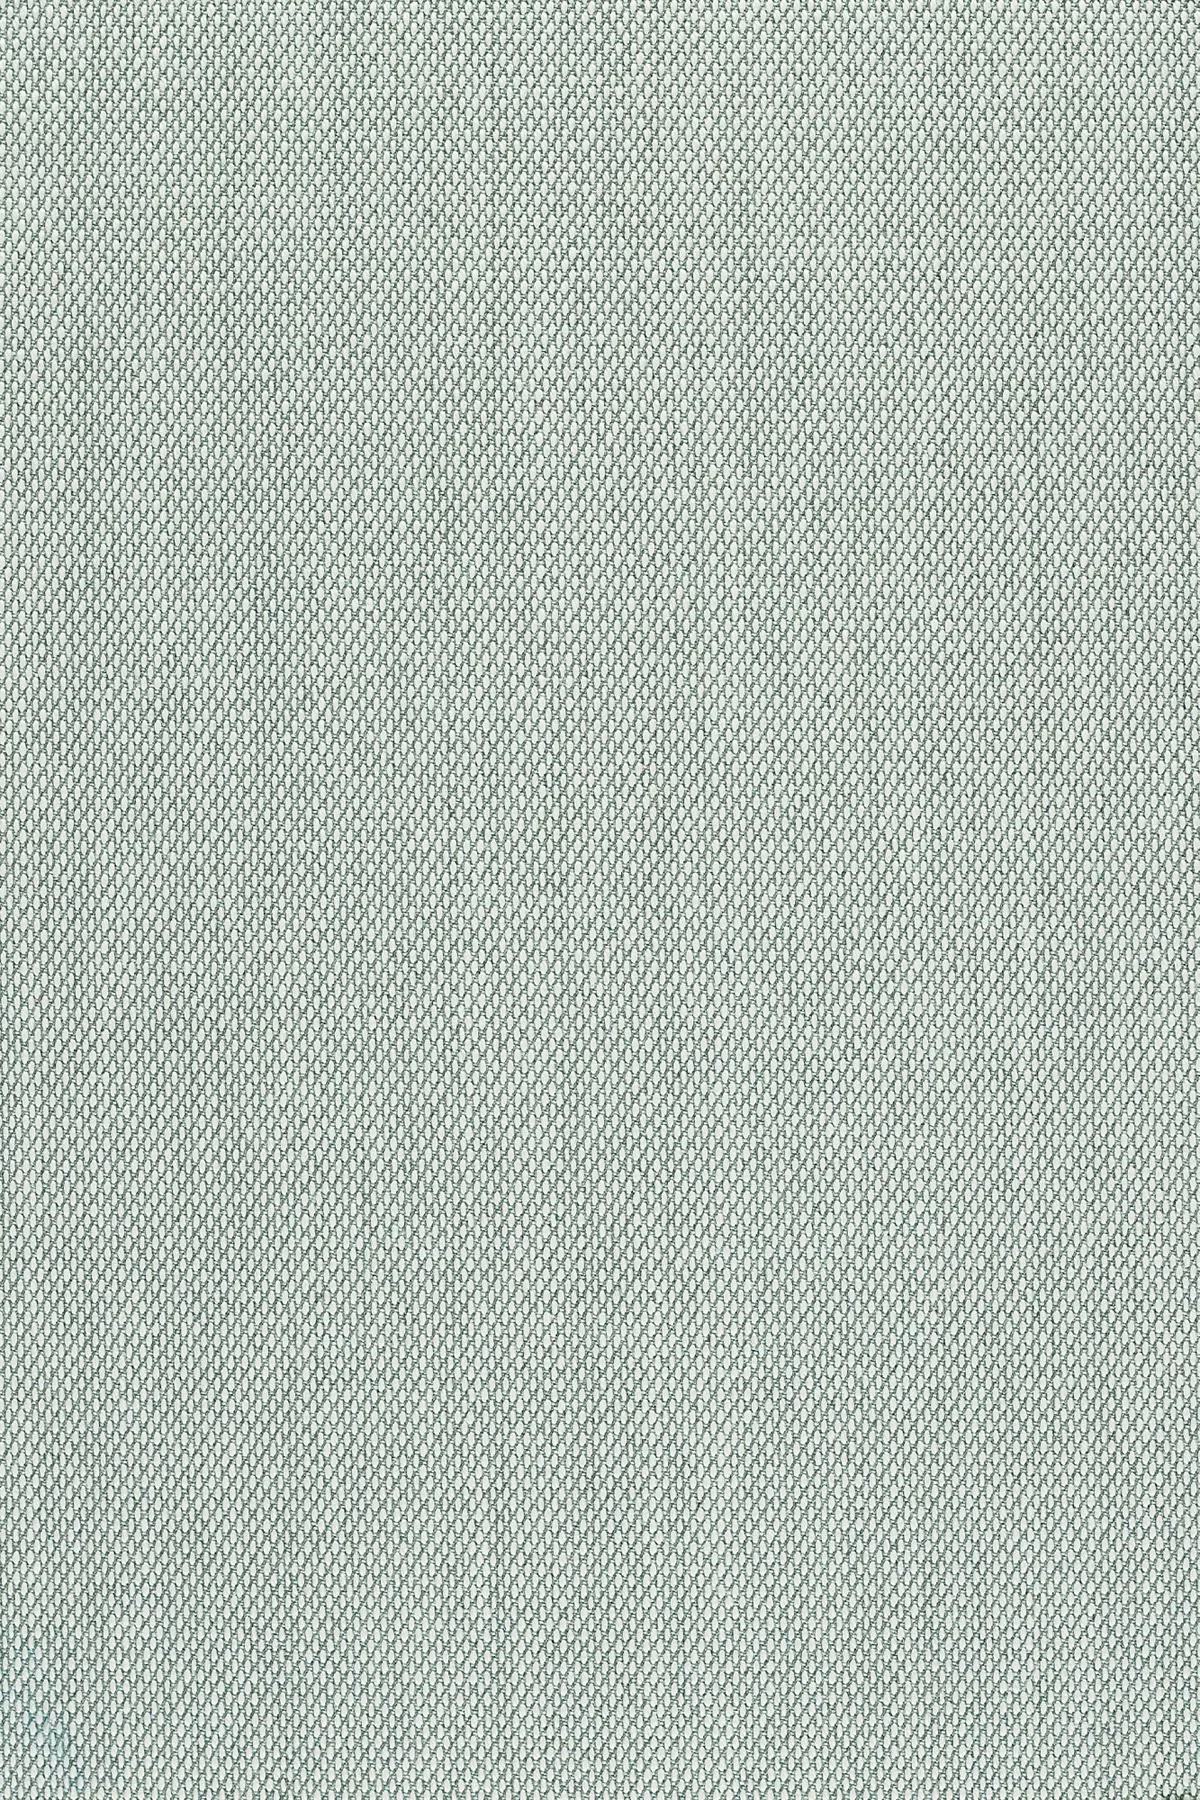 Fabric sample Steelcut Trio 3 113 green